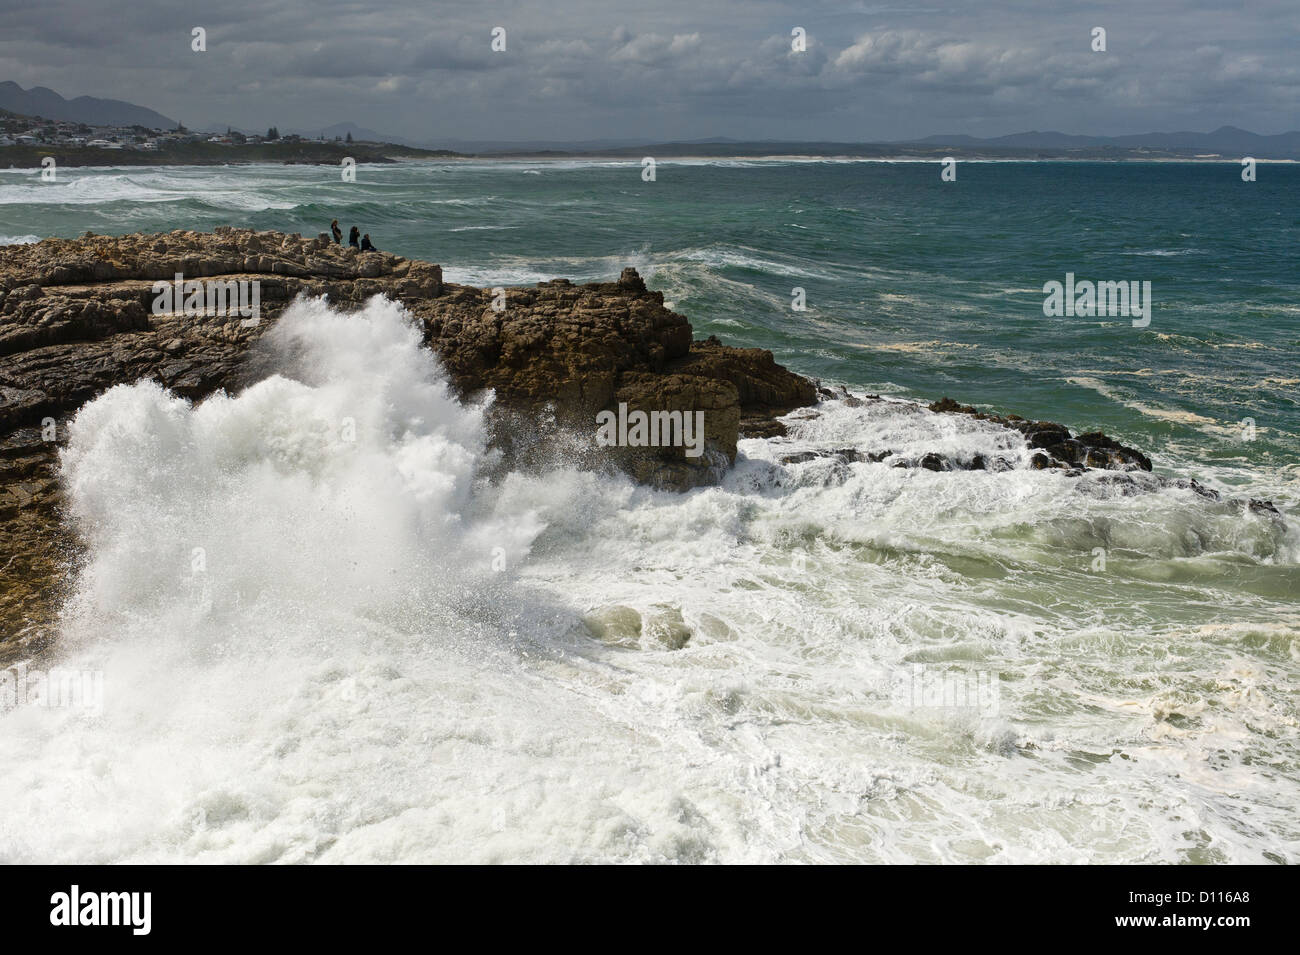 People watching waves crushing on the rocks, Hermanus, South Africa Stock Photo